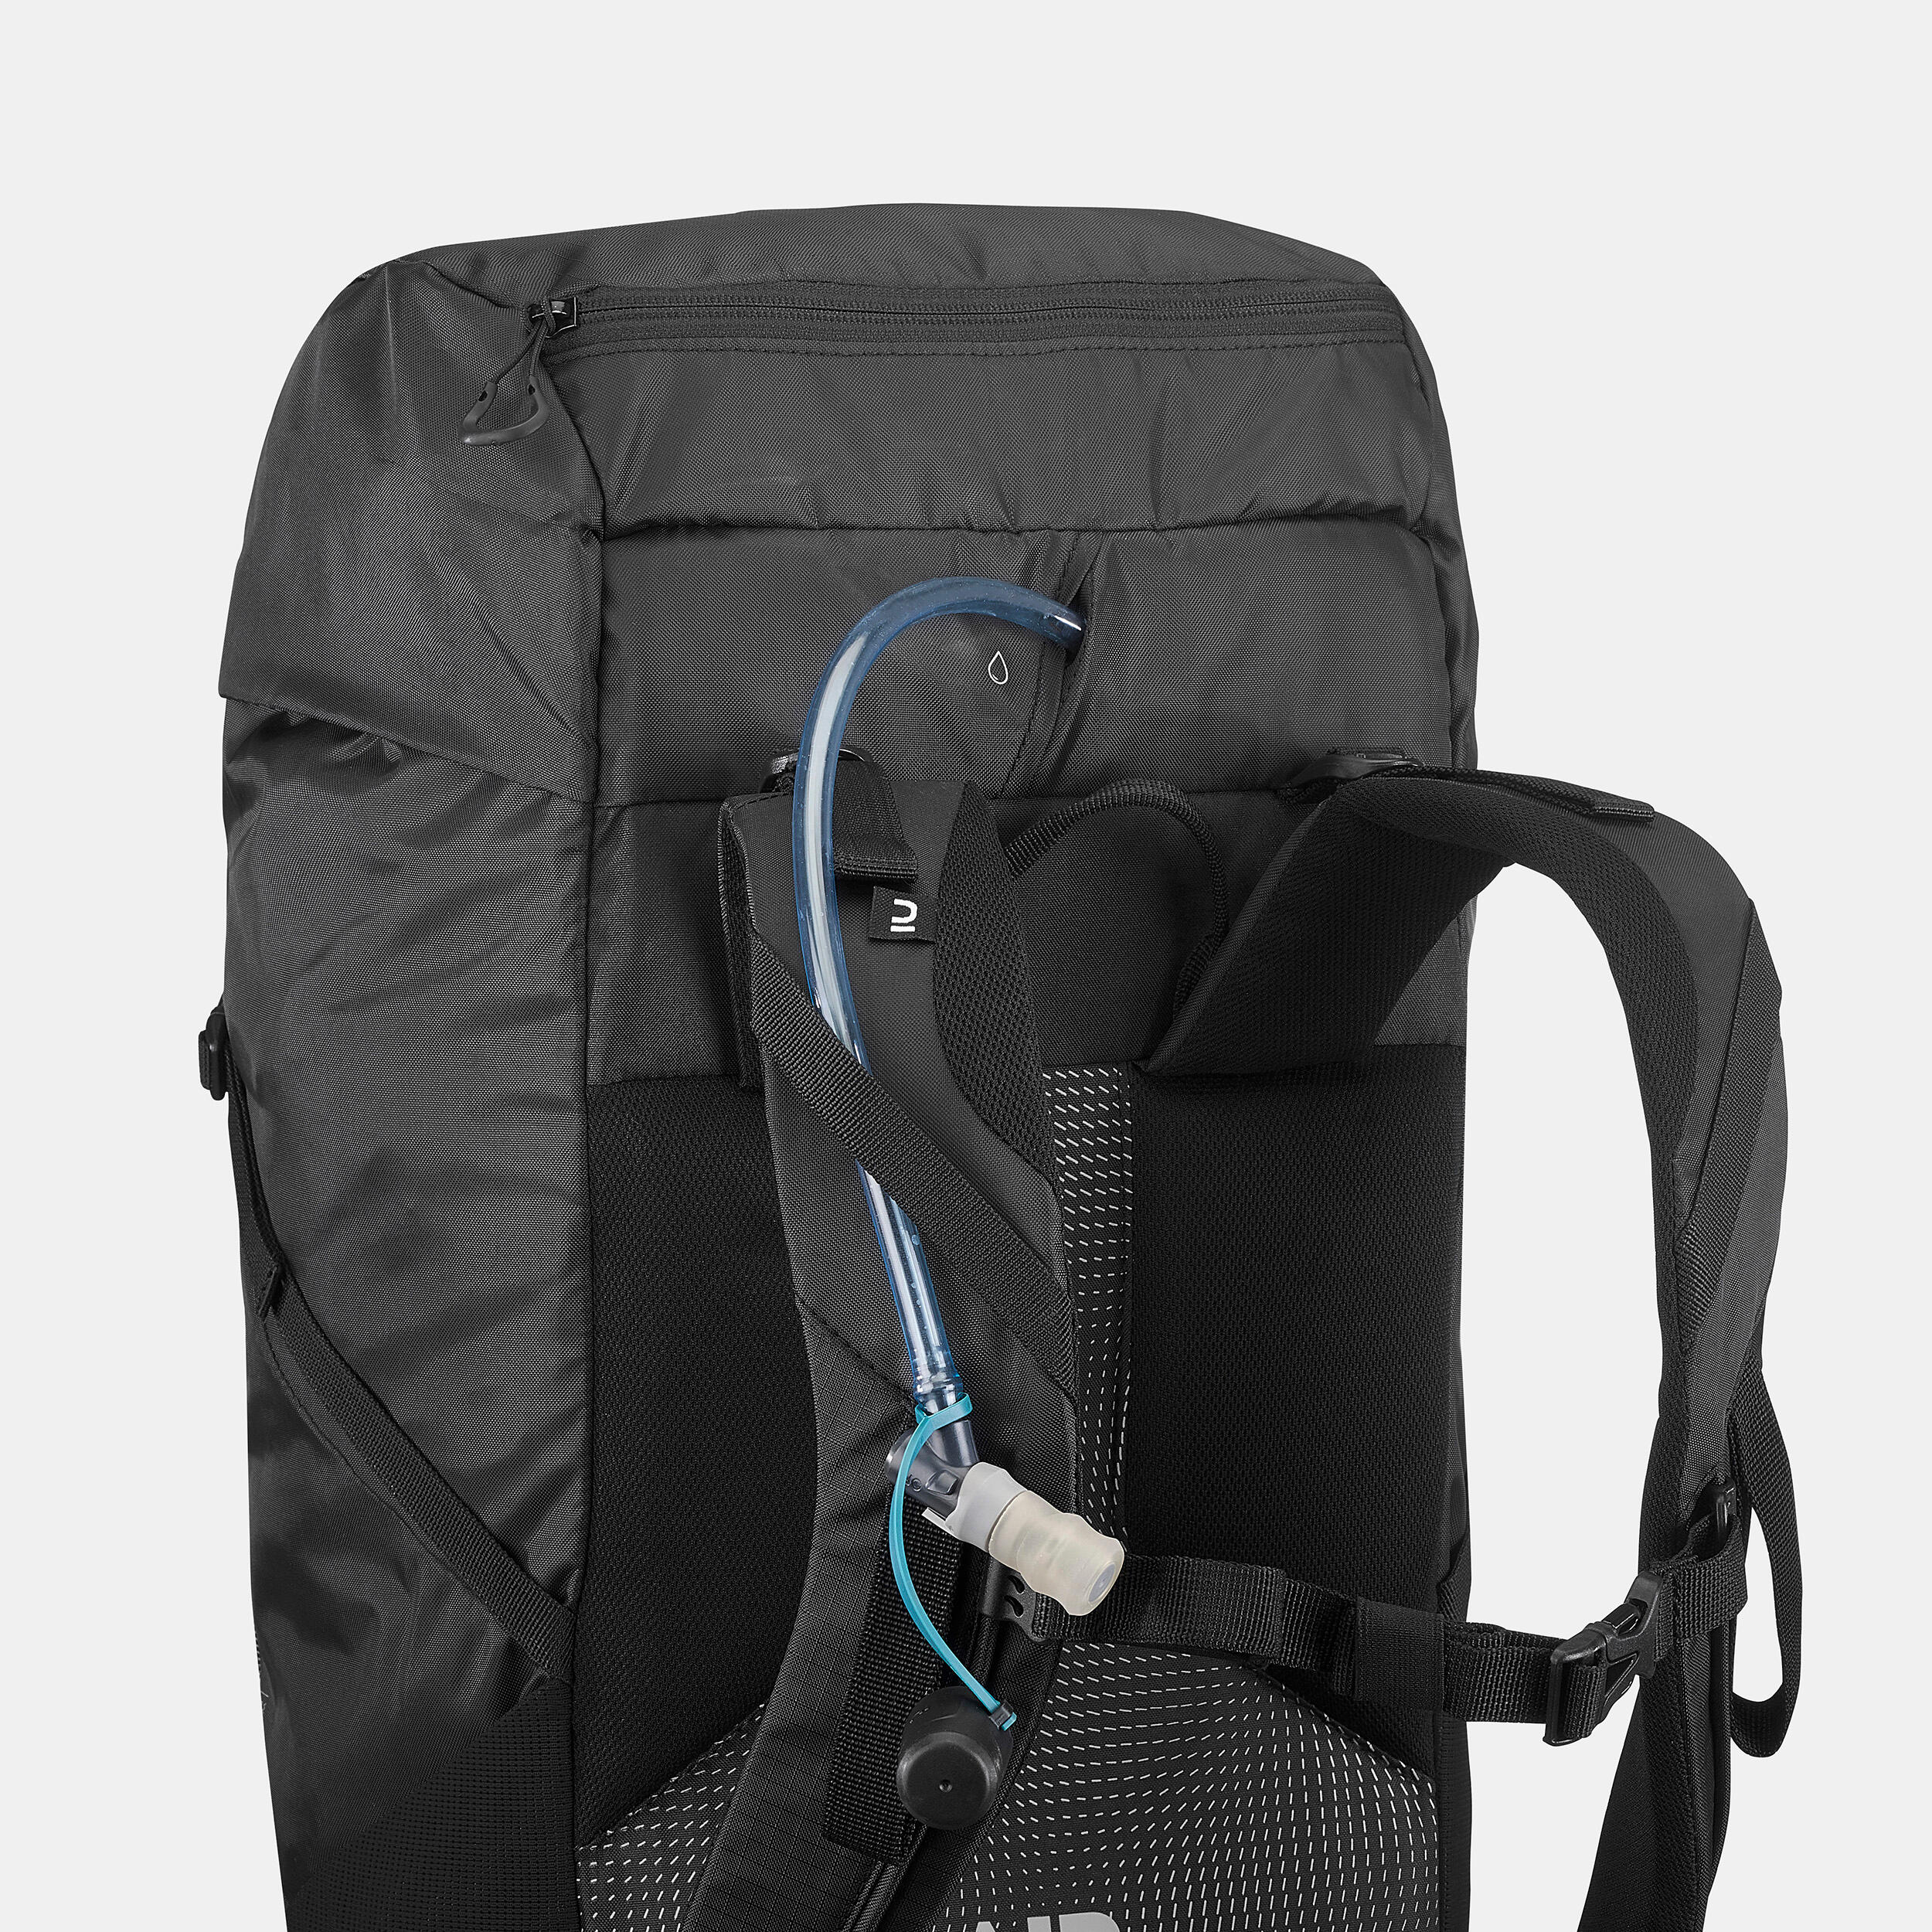 35 L Hiking Backpack - MH 100 Black - black - Quechua - Decathlon